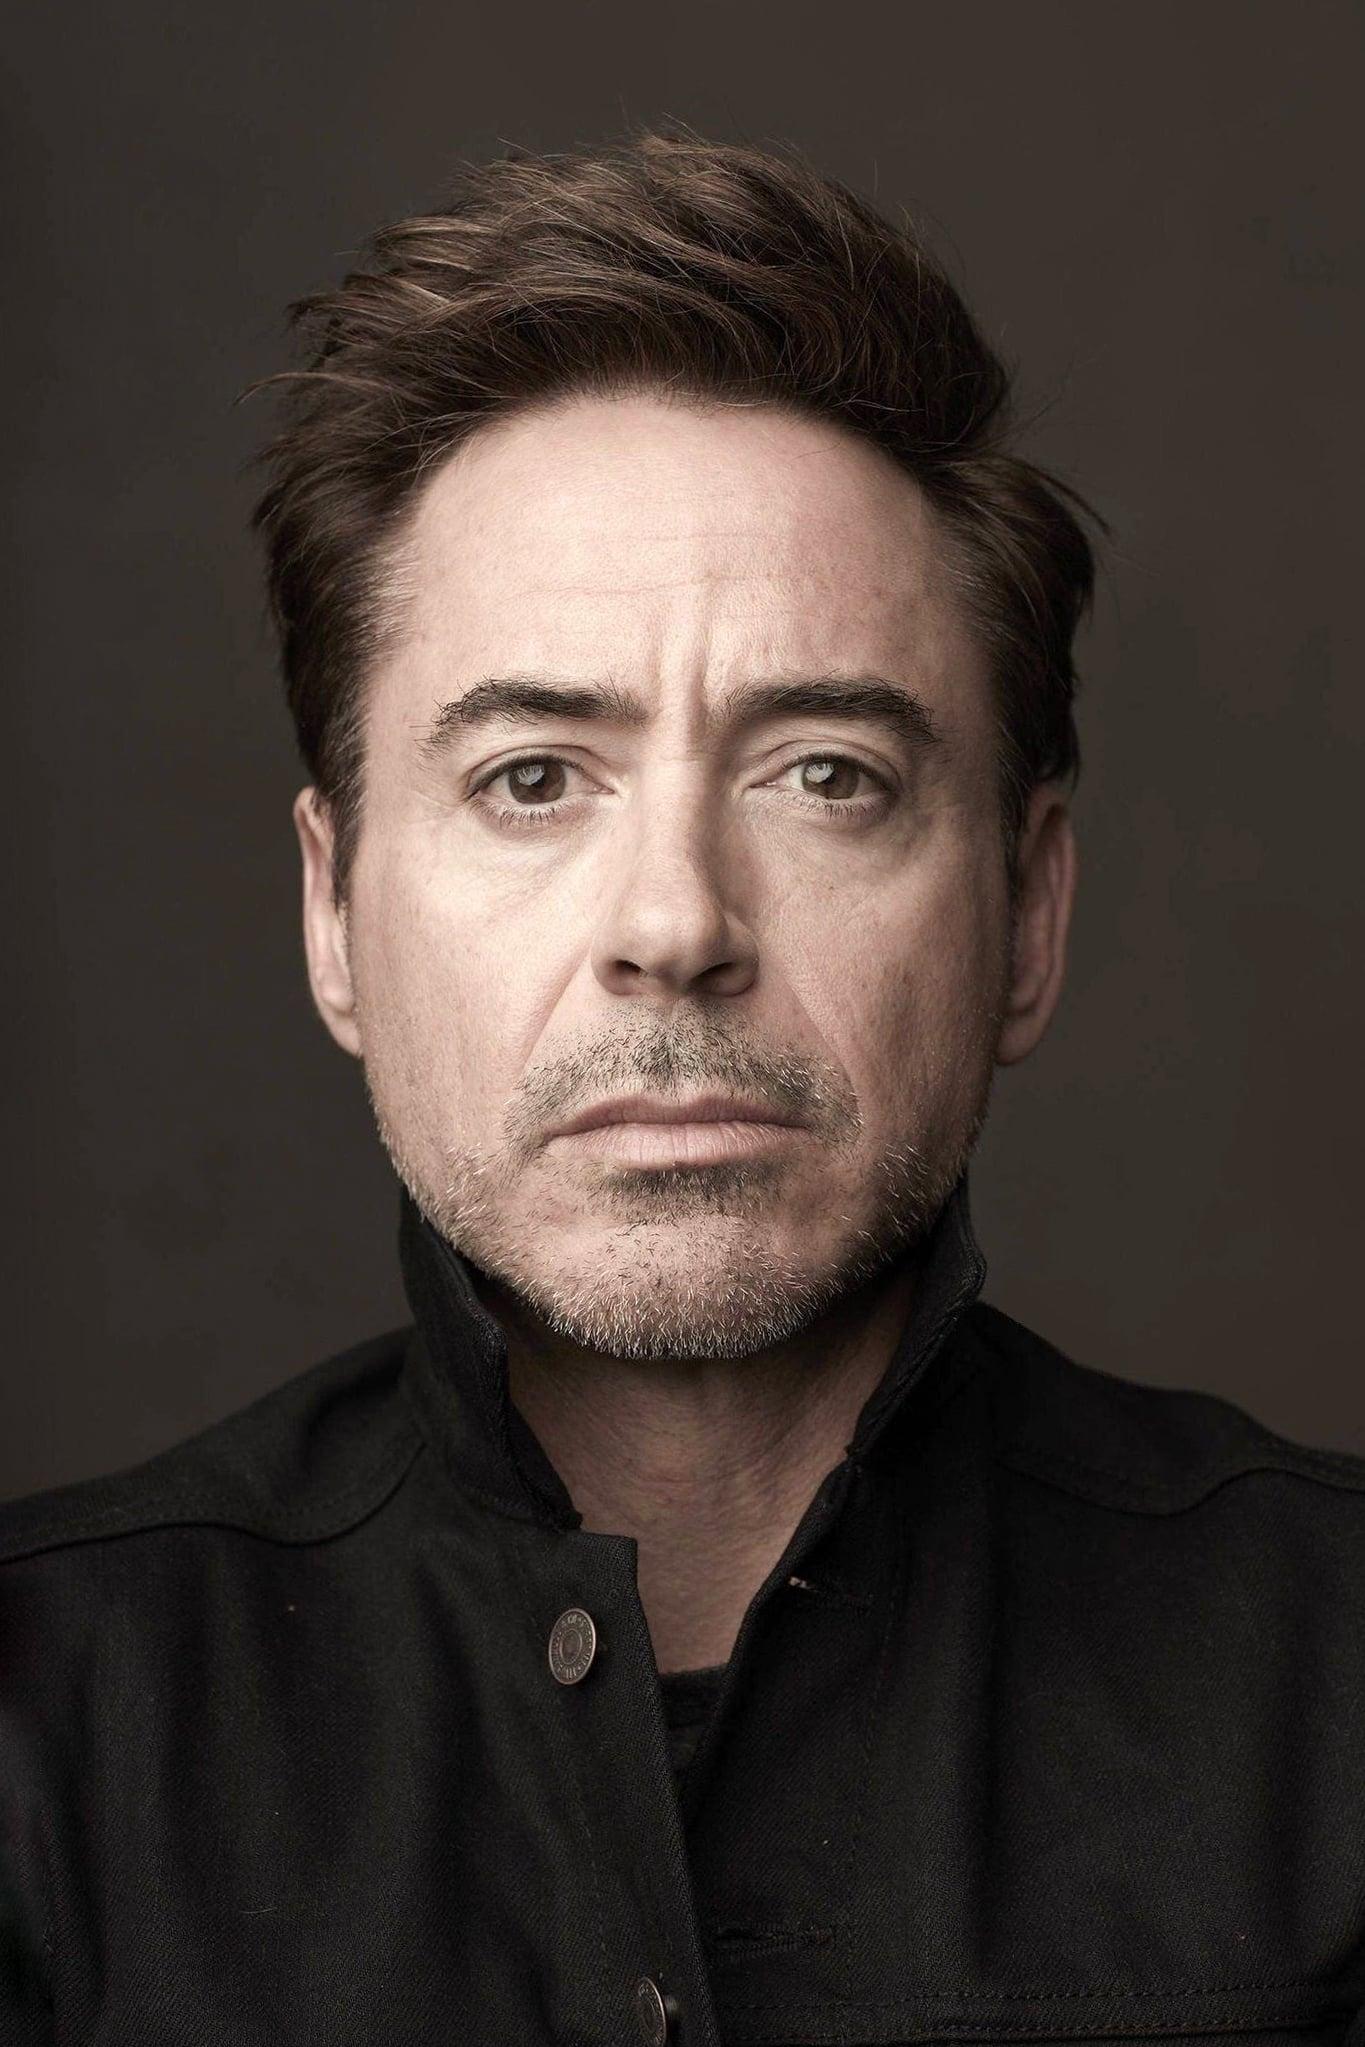 Robert Downey Jr. | Kirk Lazarus